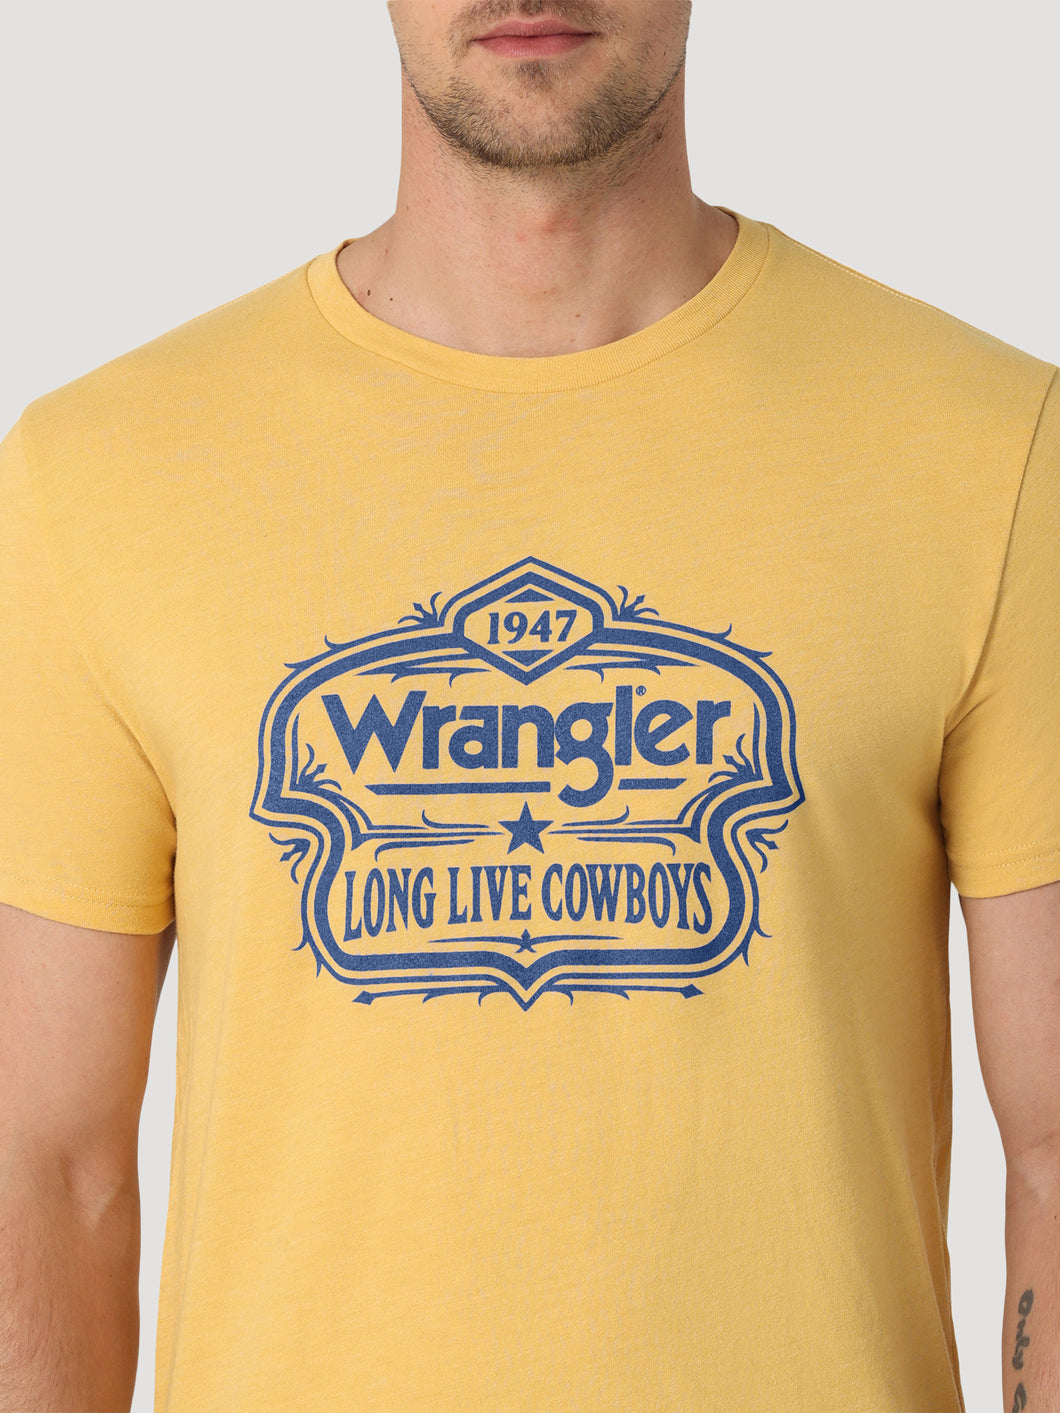 Wrangler Long Live Cowboys Tee